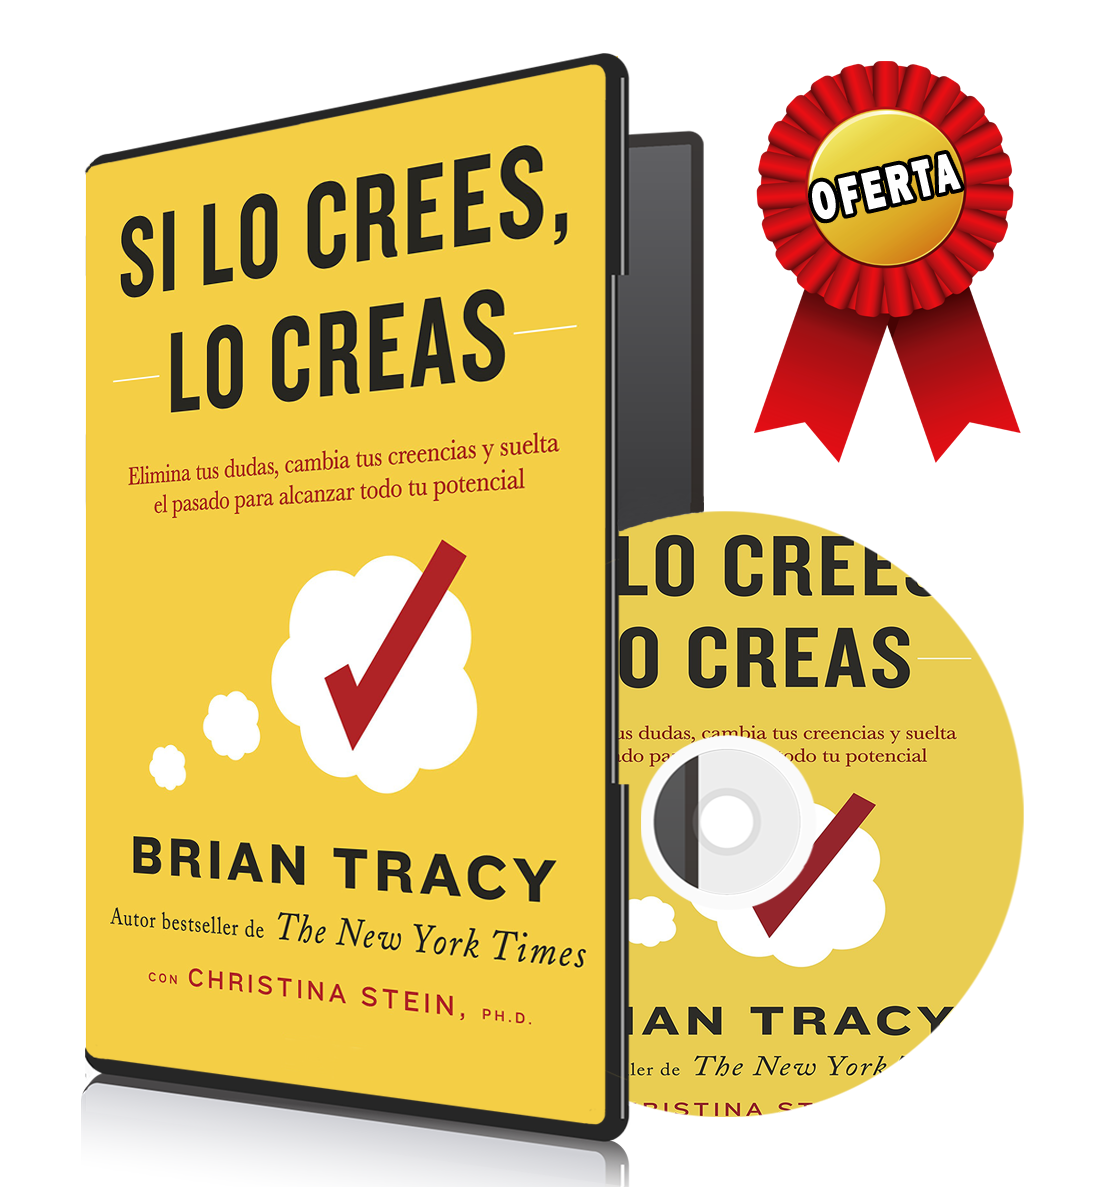 Si lo crees, lo creas - Brian Tracy (Author) - AUDIOLIBRO COMPLETO GRA